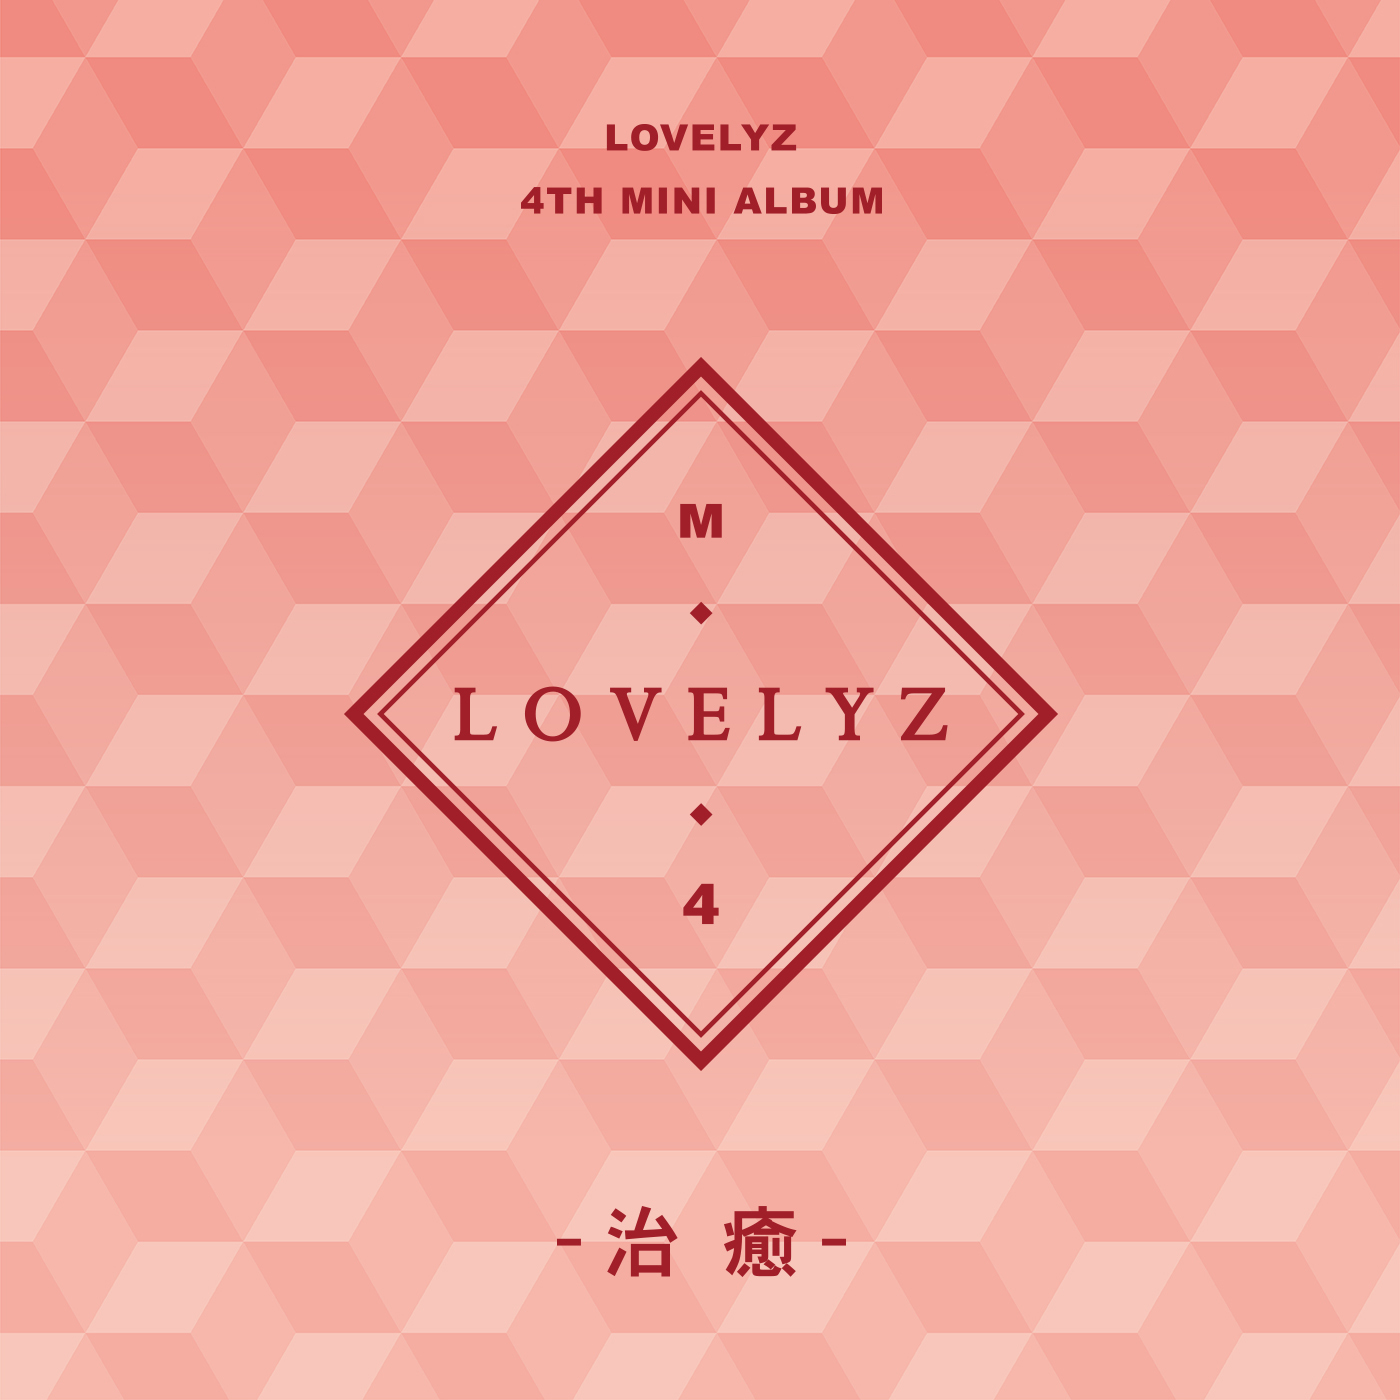 Lovelyz】Lovelyz 韓国 4th Mini Album [治癒] プロモーションイベント 